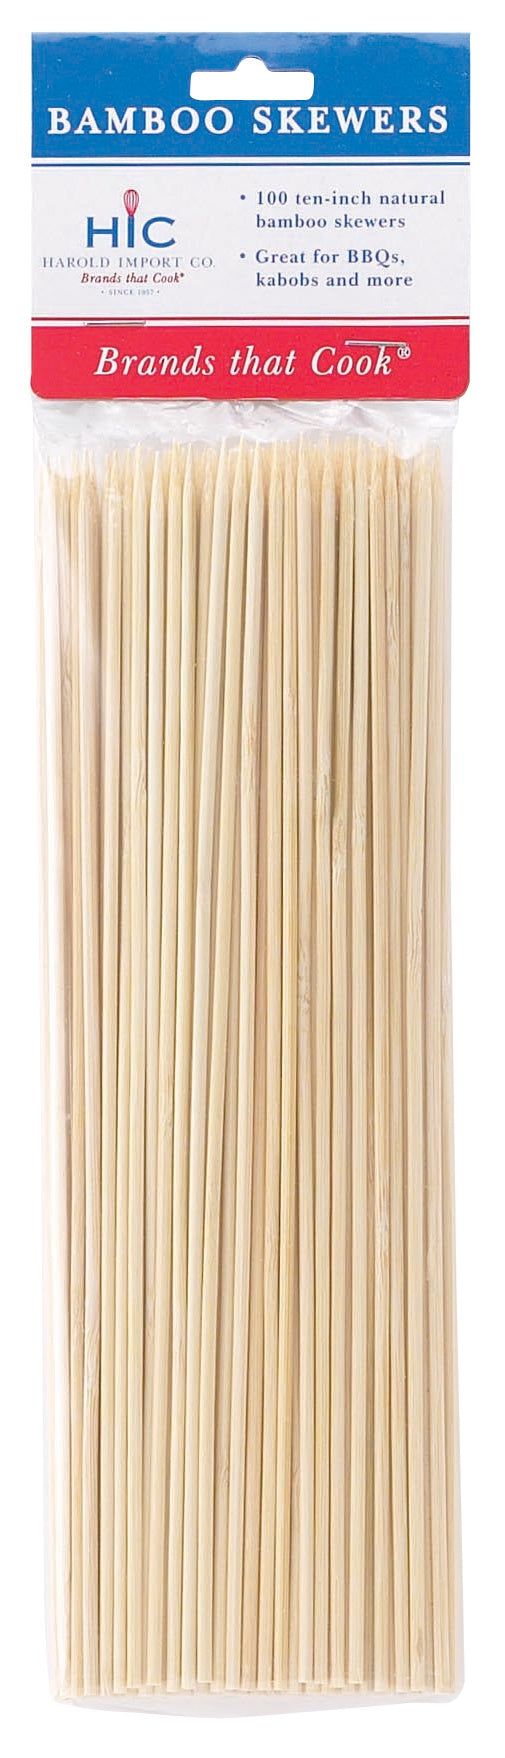 10 Inch Bamboo Skewers, Package of 100